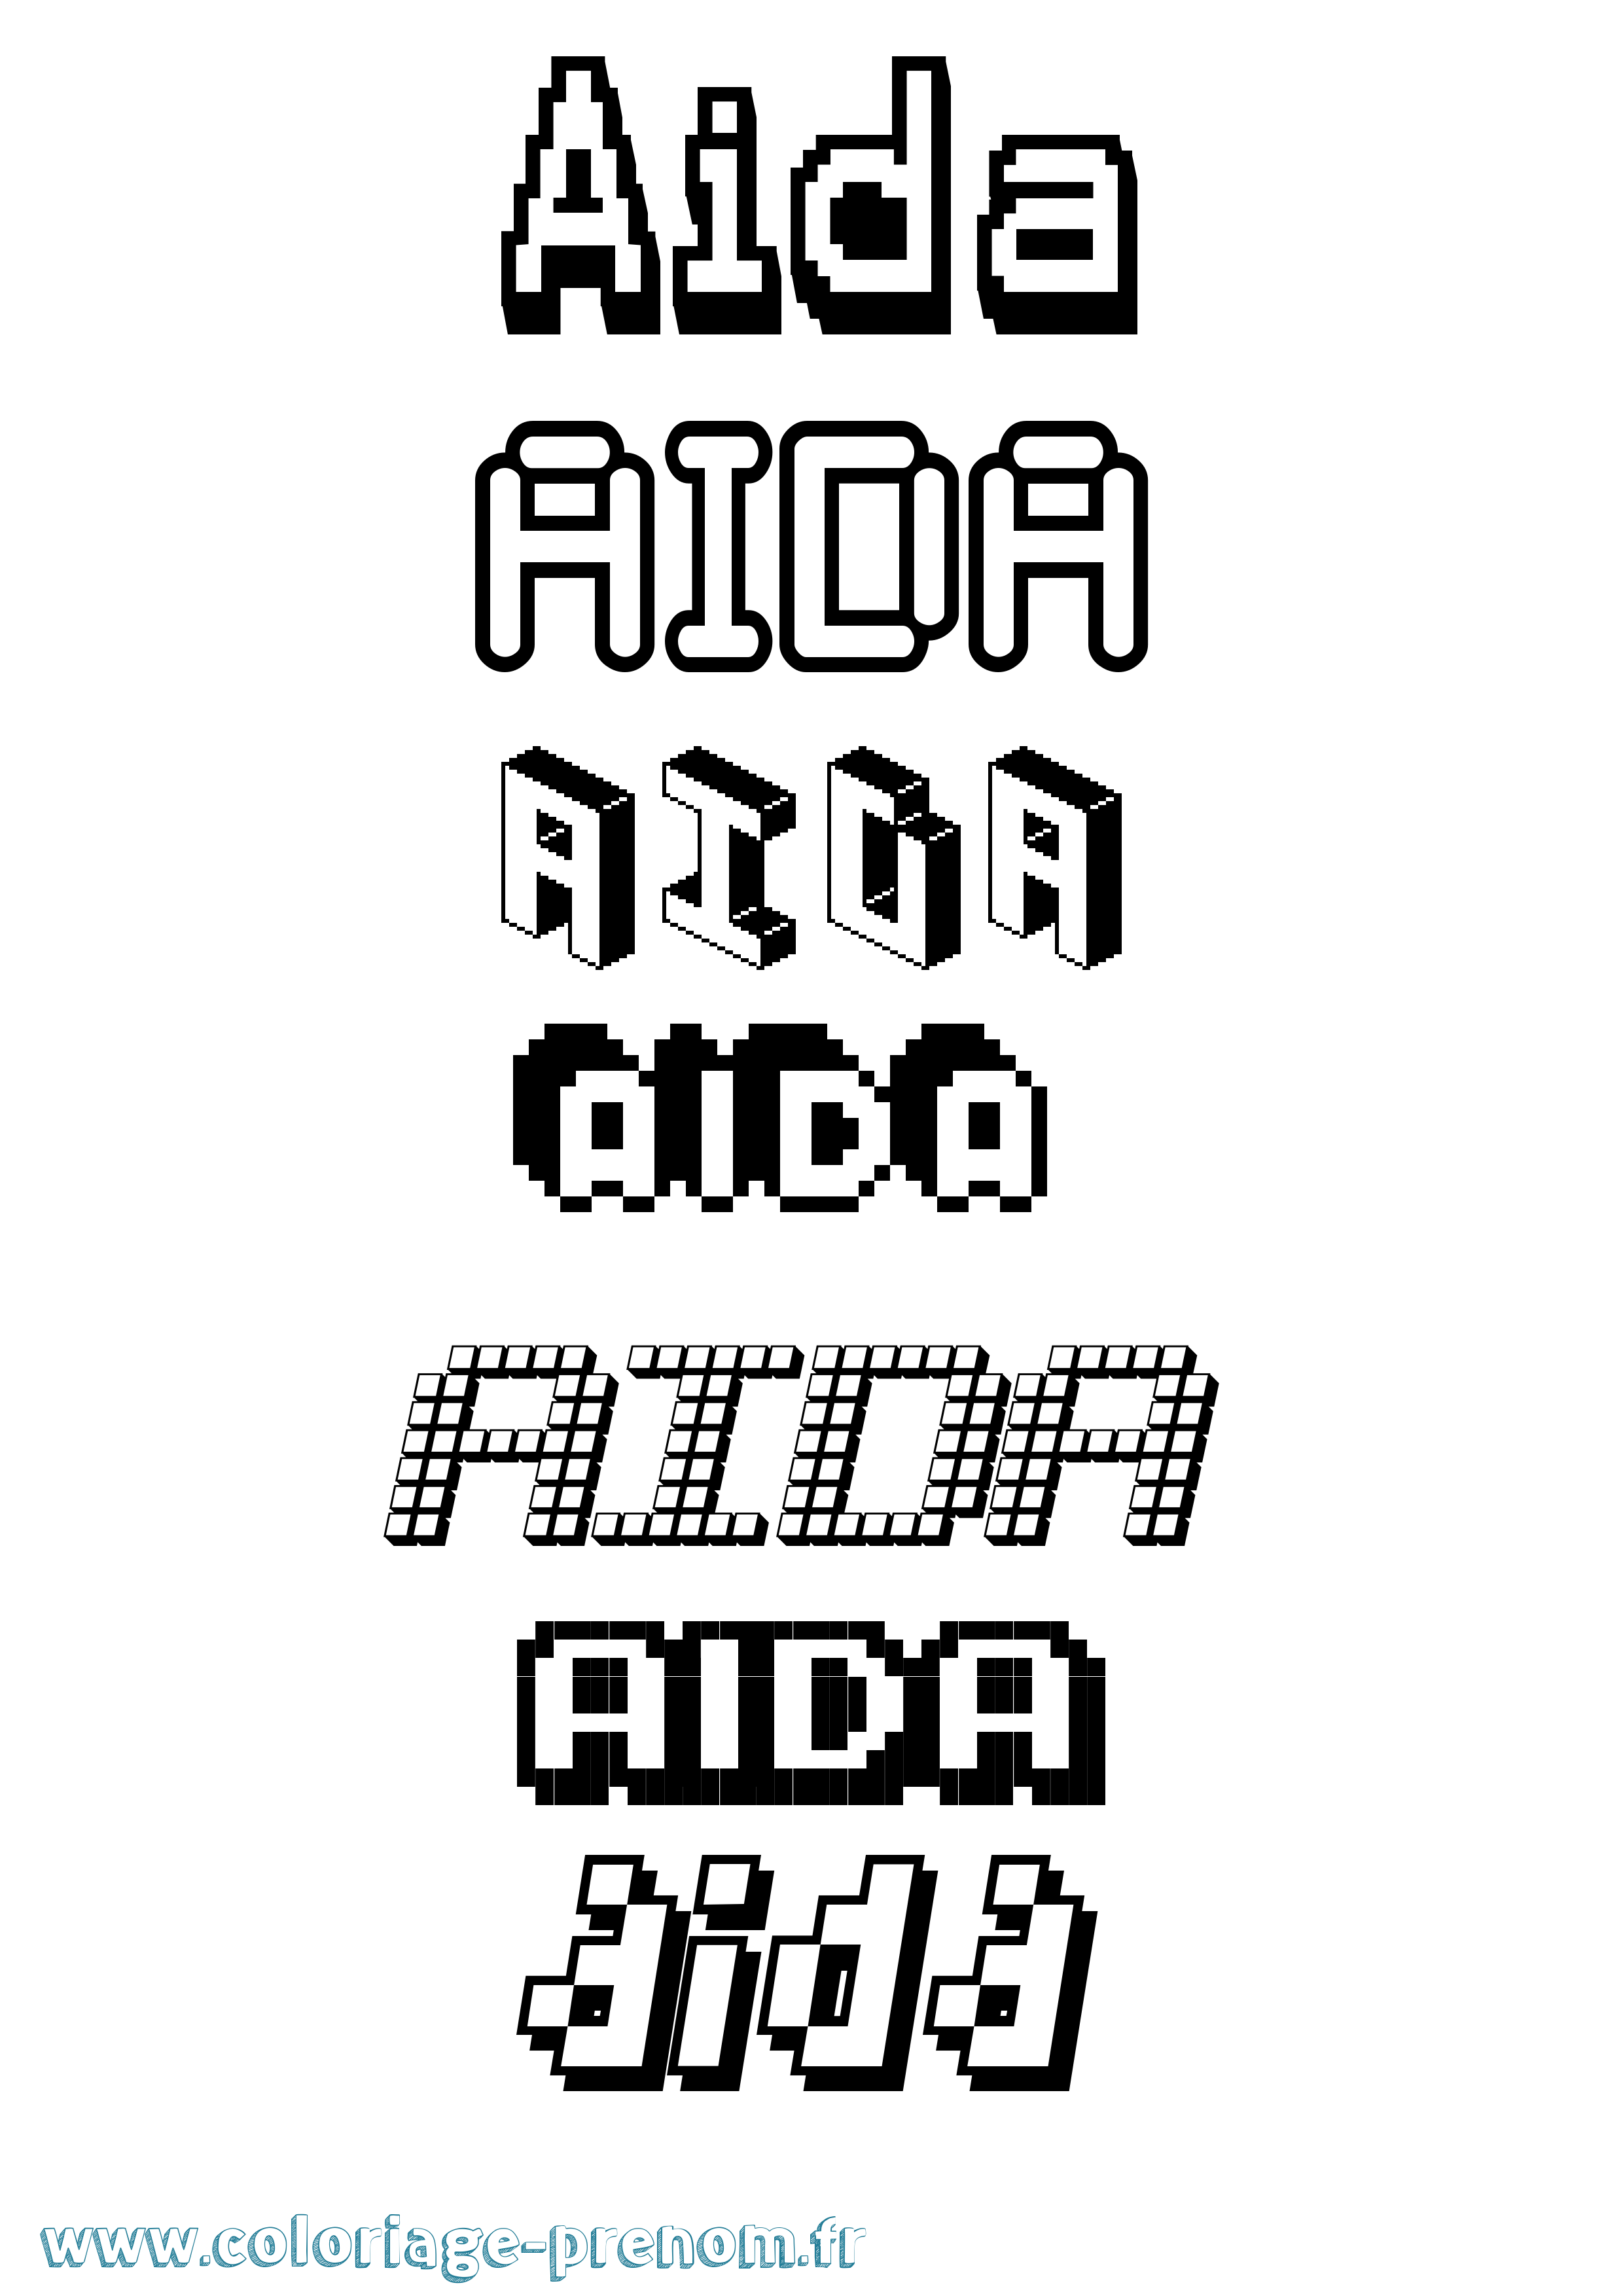 Coloriage prénom Aida Pixel